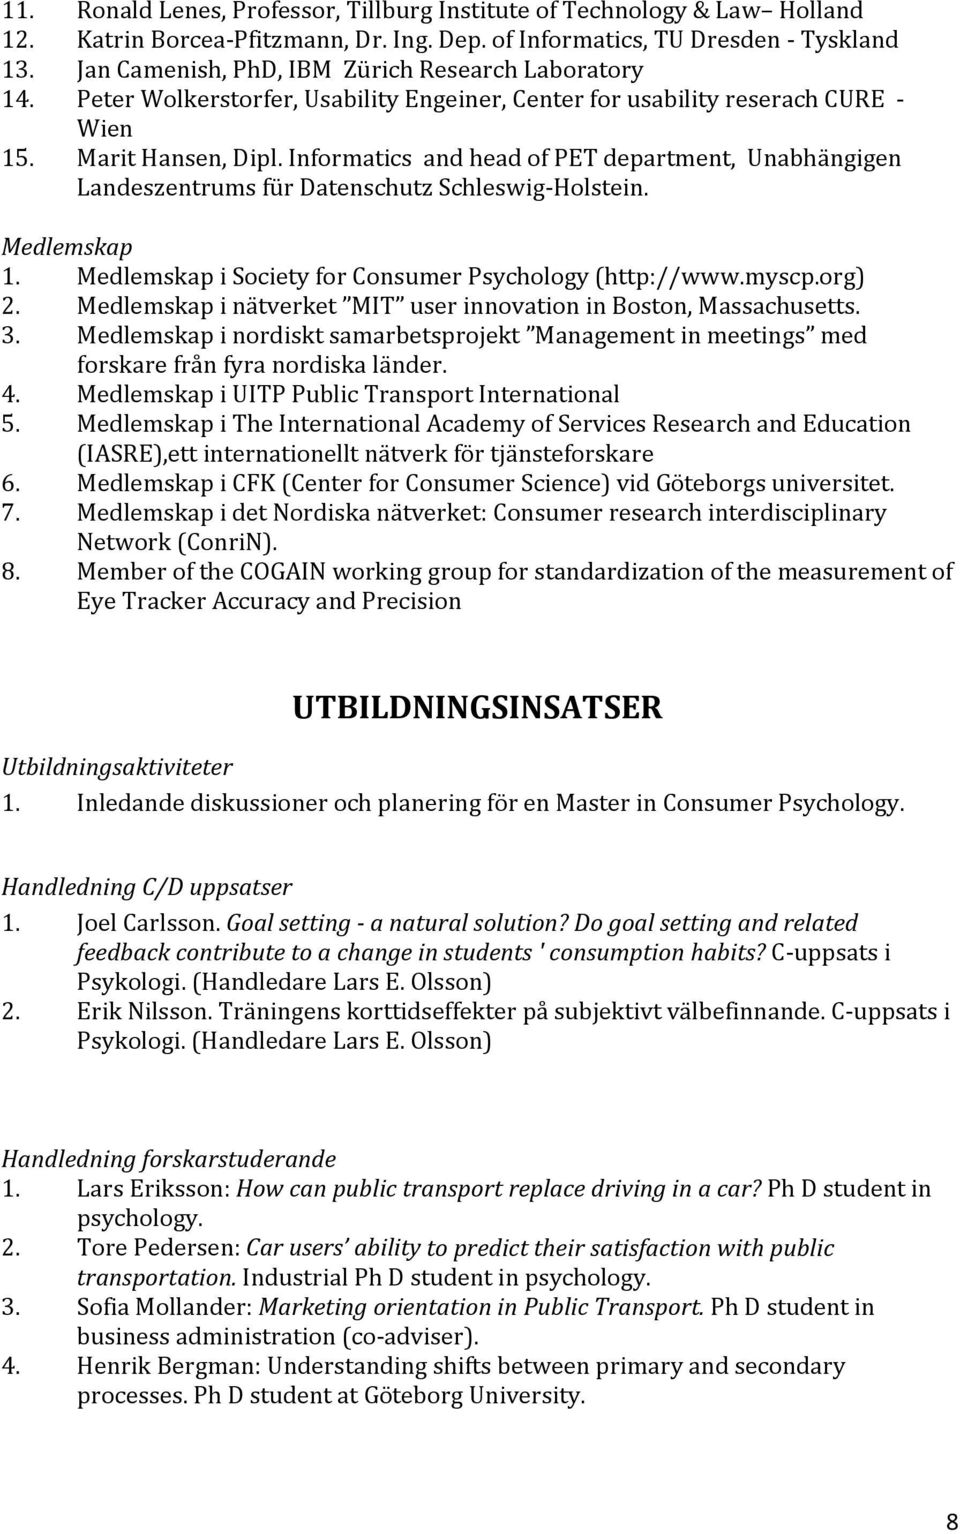 Informatics and head of PET department, Unabhängigen Landeszentrums für Datenschutz Schleswig Holstein. Medlemskap 1. Medlemskap i Society for Consumer Psychology (http://www.myscp.org) 2.